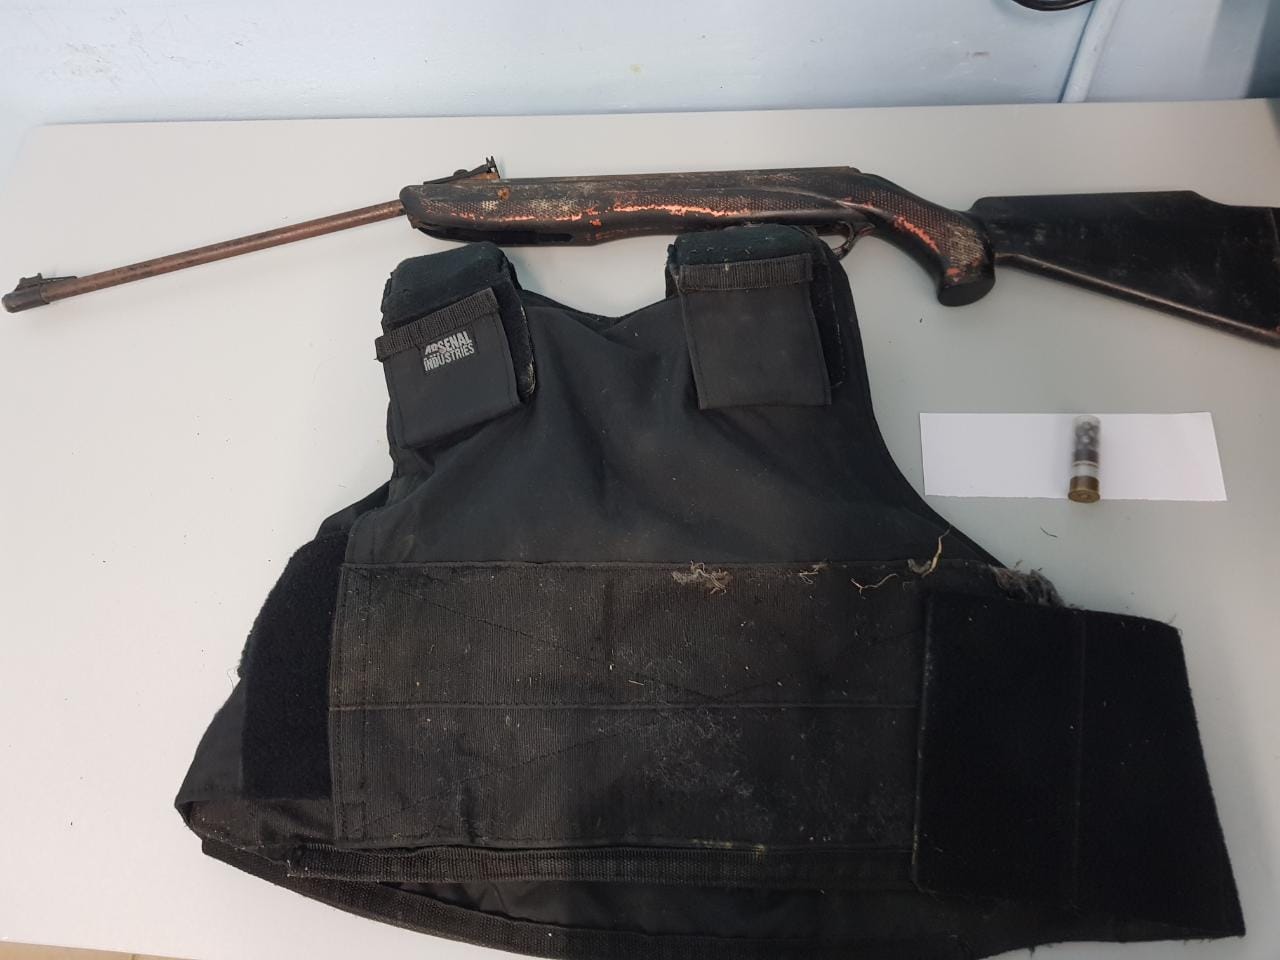 Two arrested – Air Rifle, bullet proof vest and 12-gauge ammunition seized